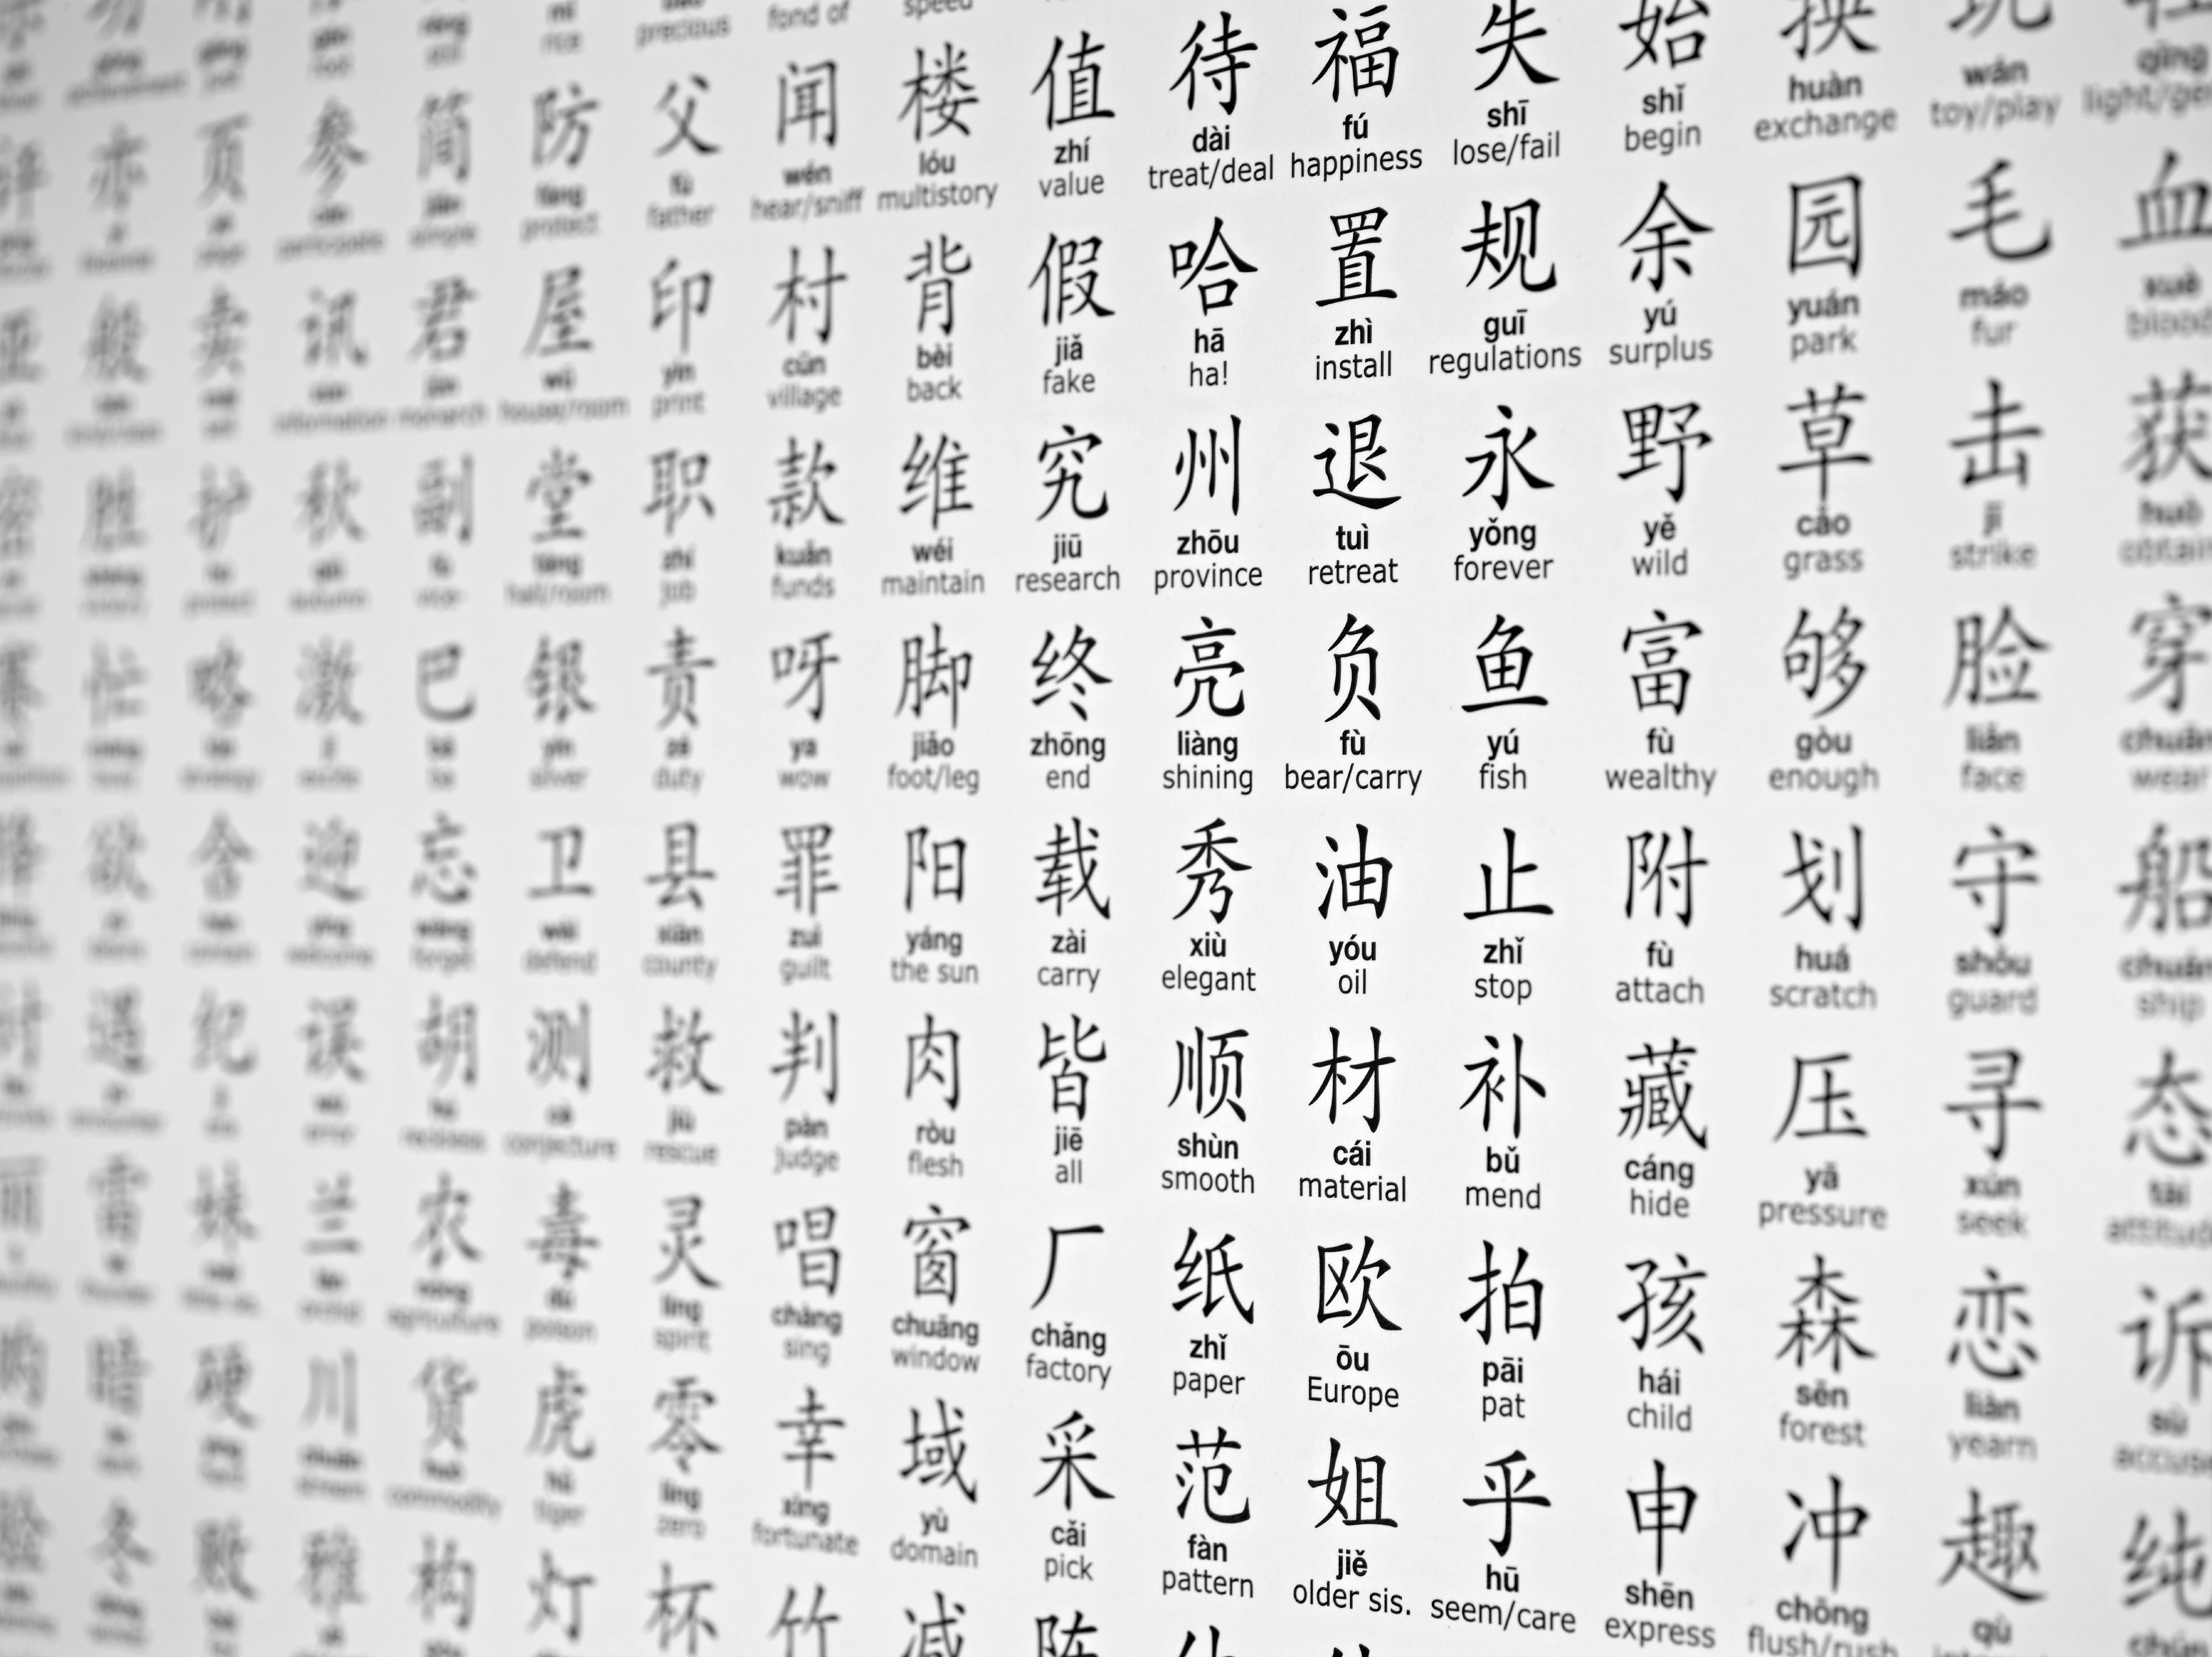 Learn Mandarin Chinese with Pinyin Romanization